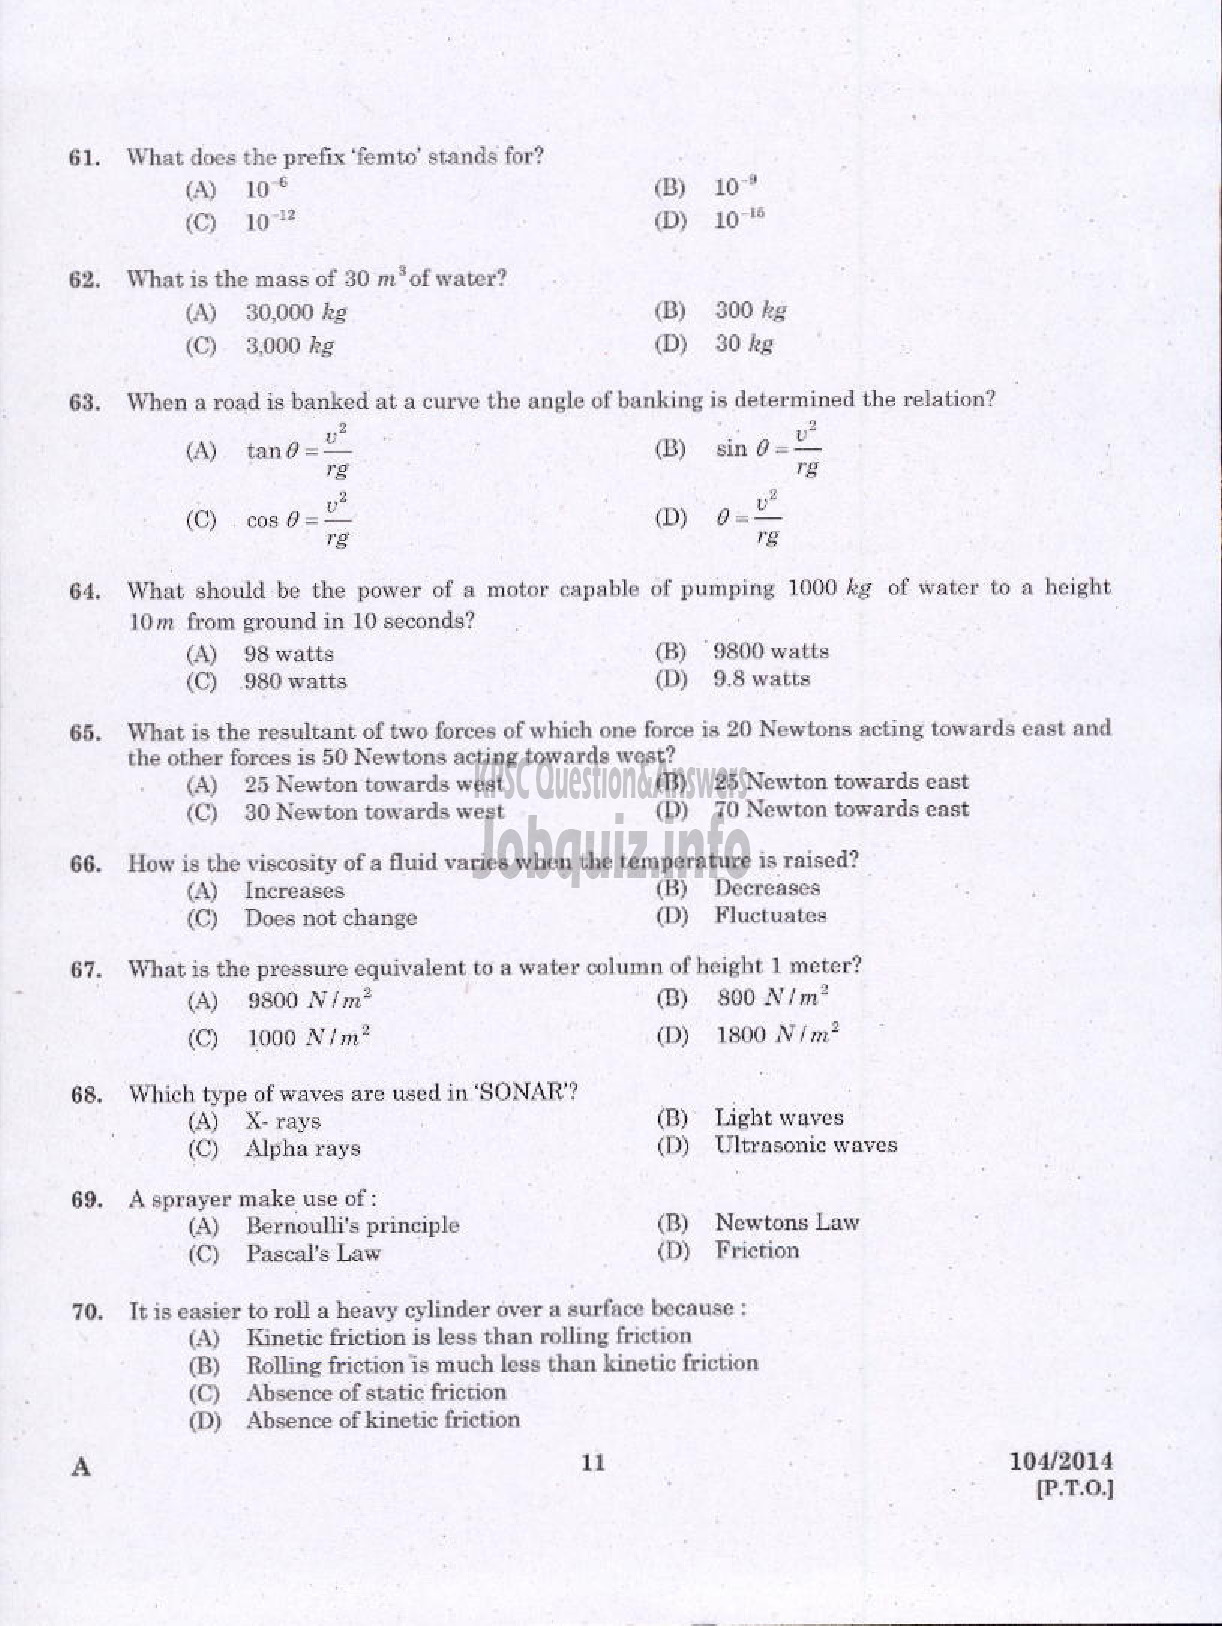 Kerala PSC Question Paper - OVERSEER DRAFTSMAN MECHANICAL GR I IRRIGATION DIRECT AND DEPT QUOTA-9